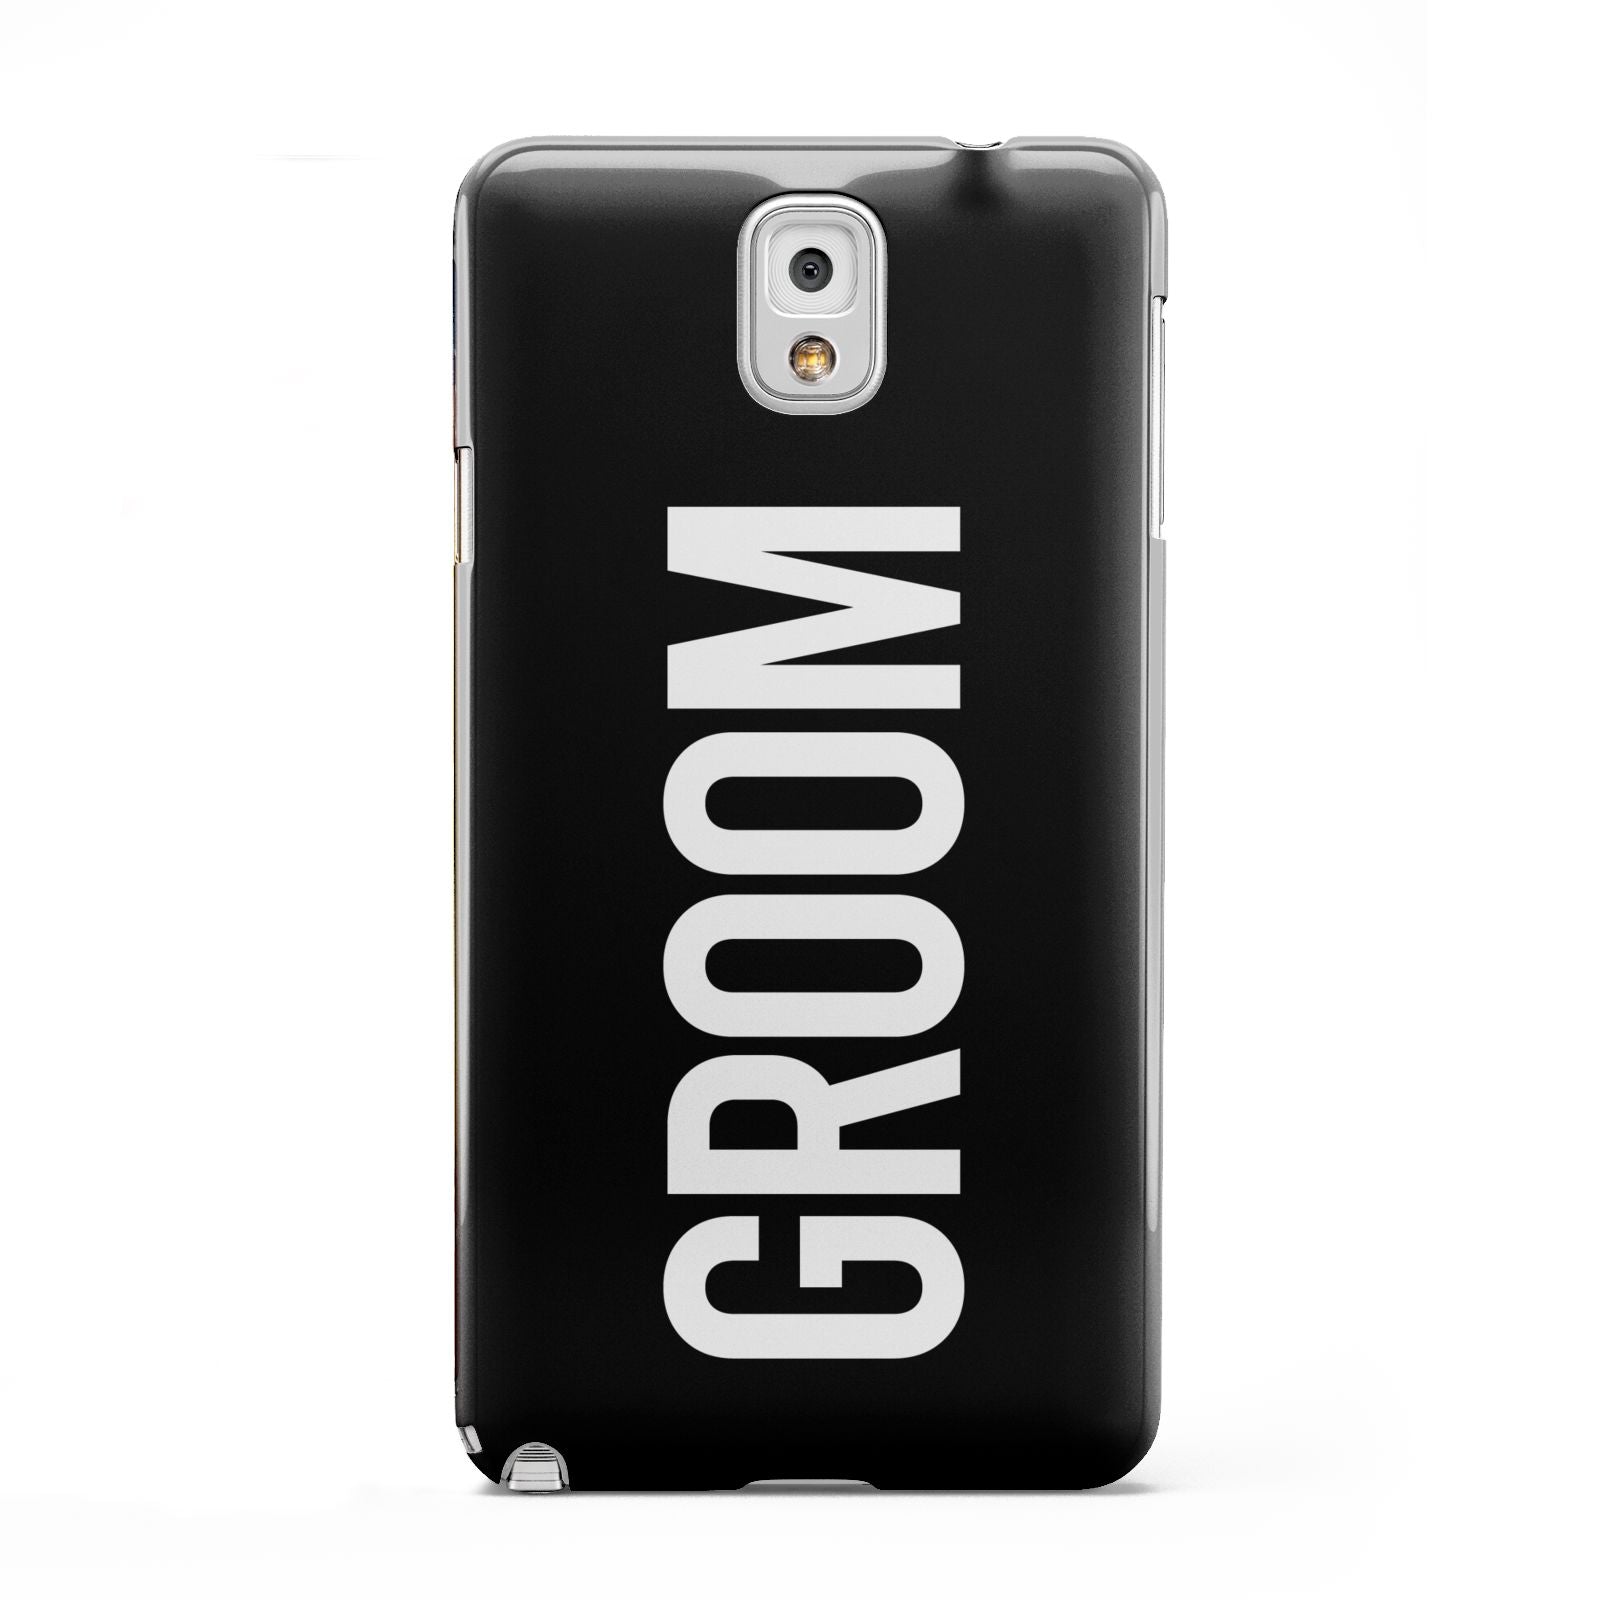 Groom Samsung Galaxy Note 3 Case